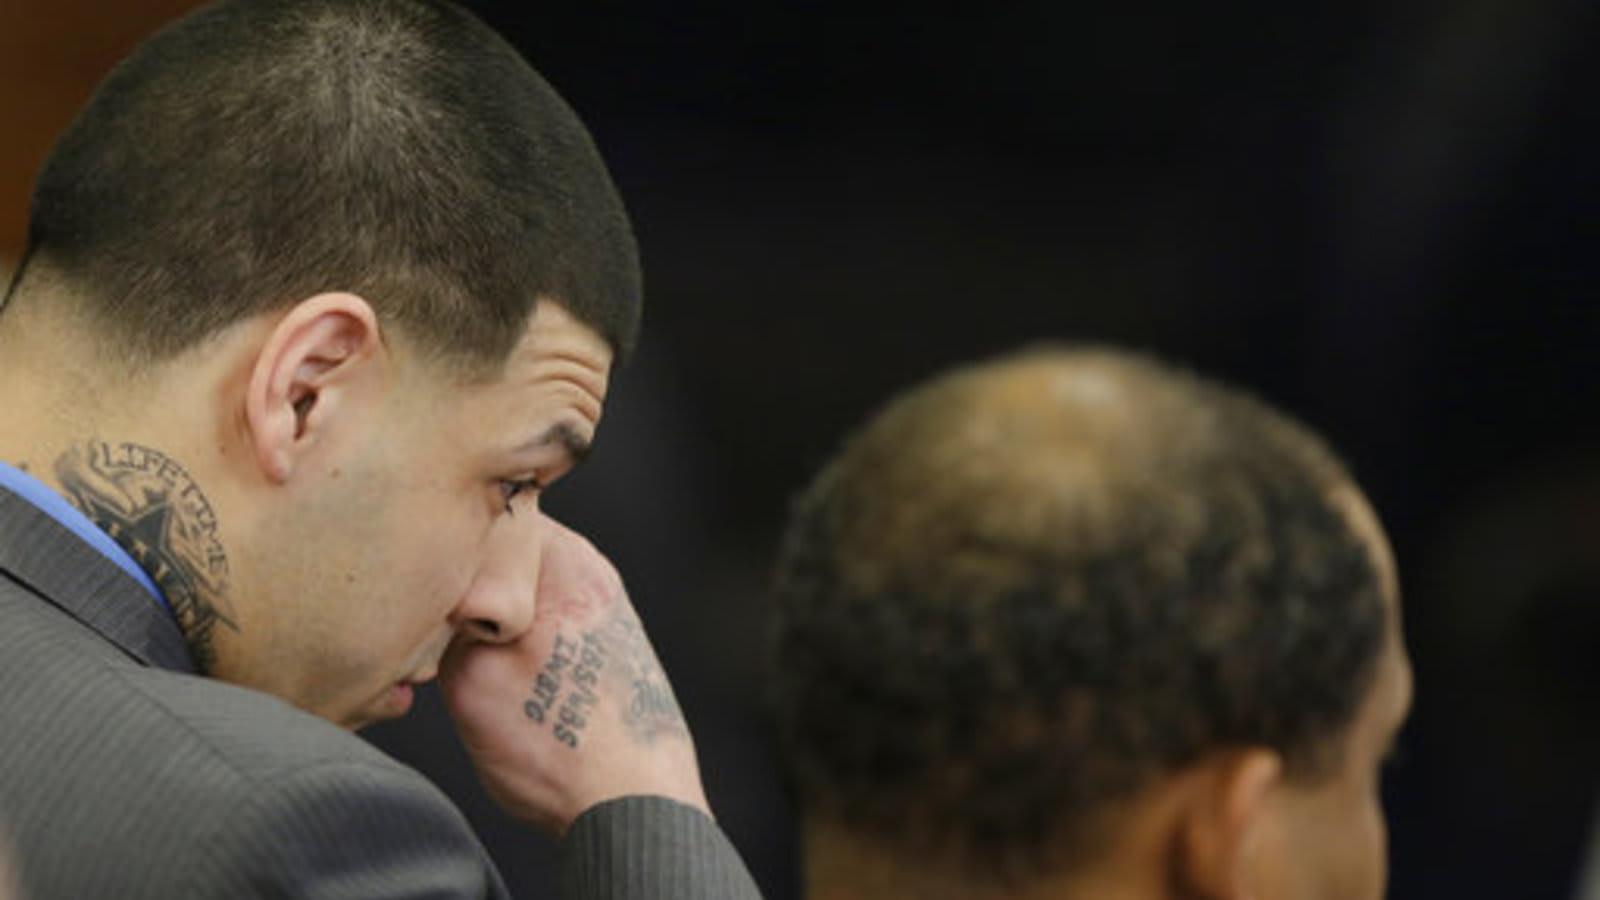 Aaron Hernandez cries after being found not guilty of murders